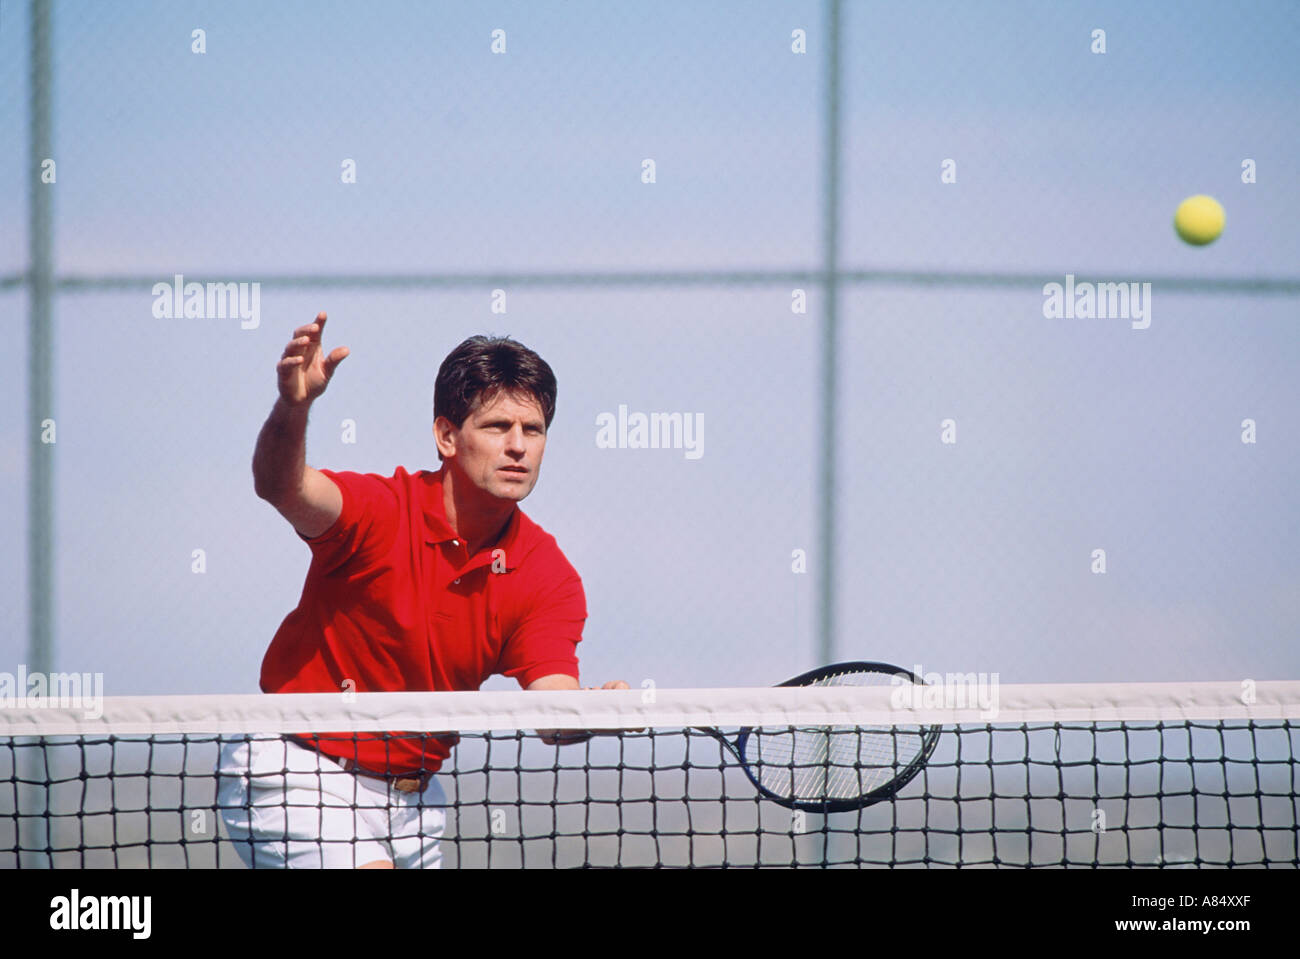 Giovane uomo giocando a tennis. Foto Stock